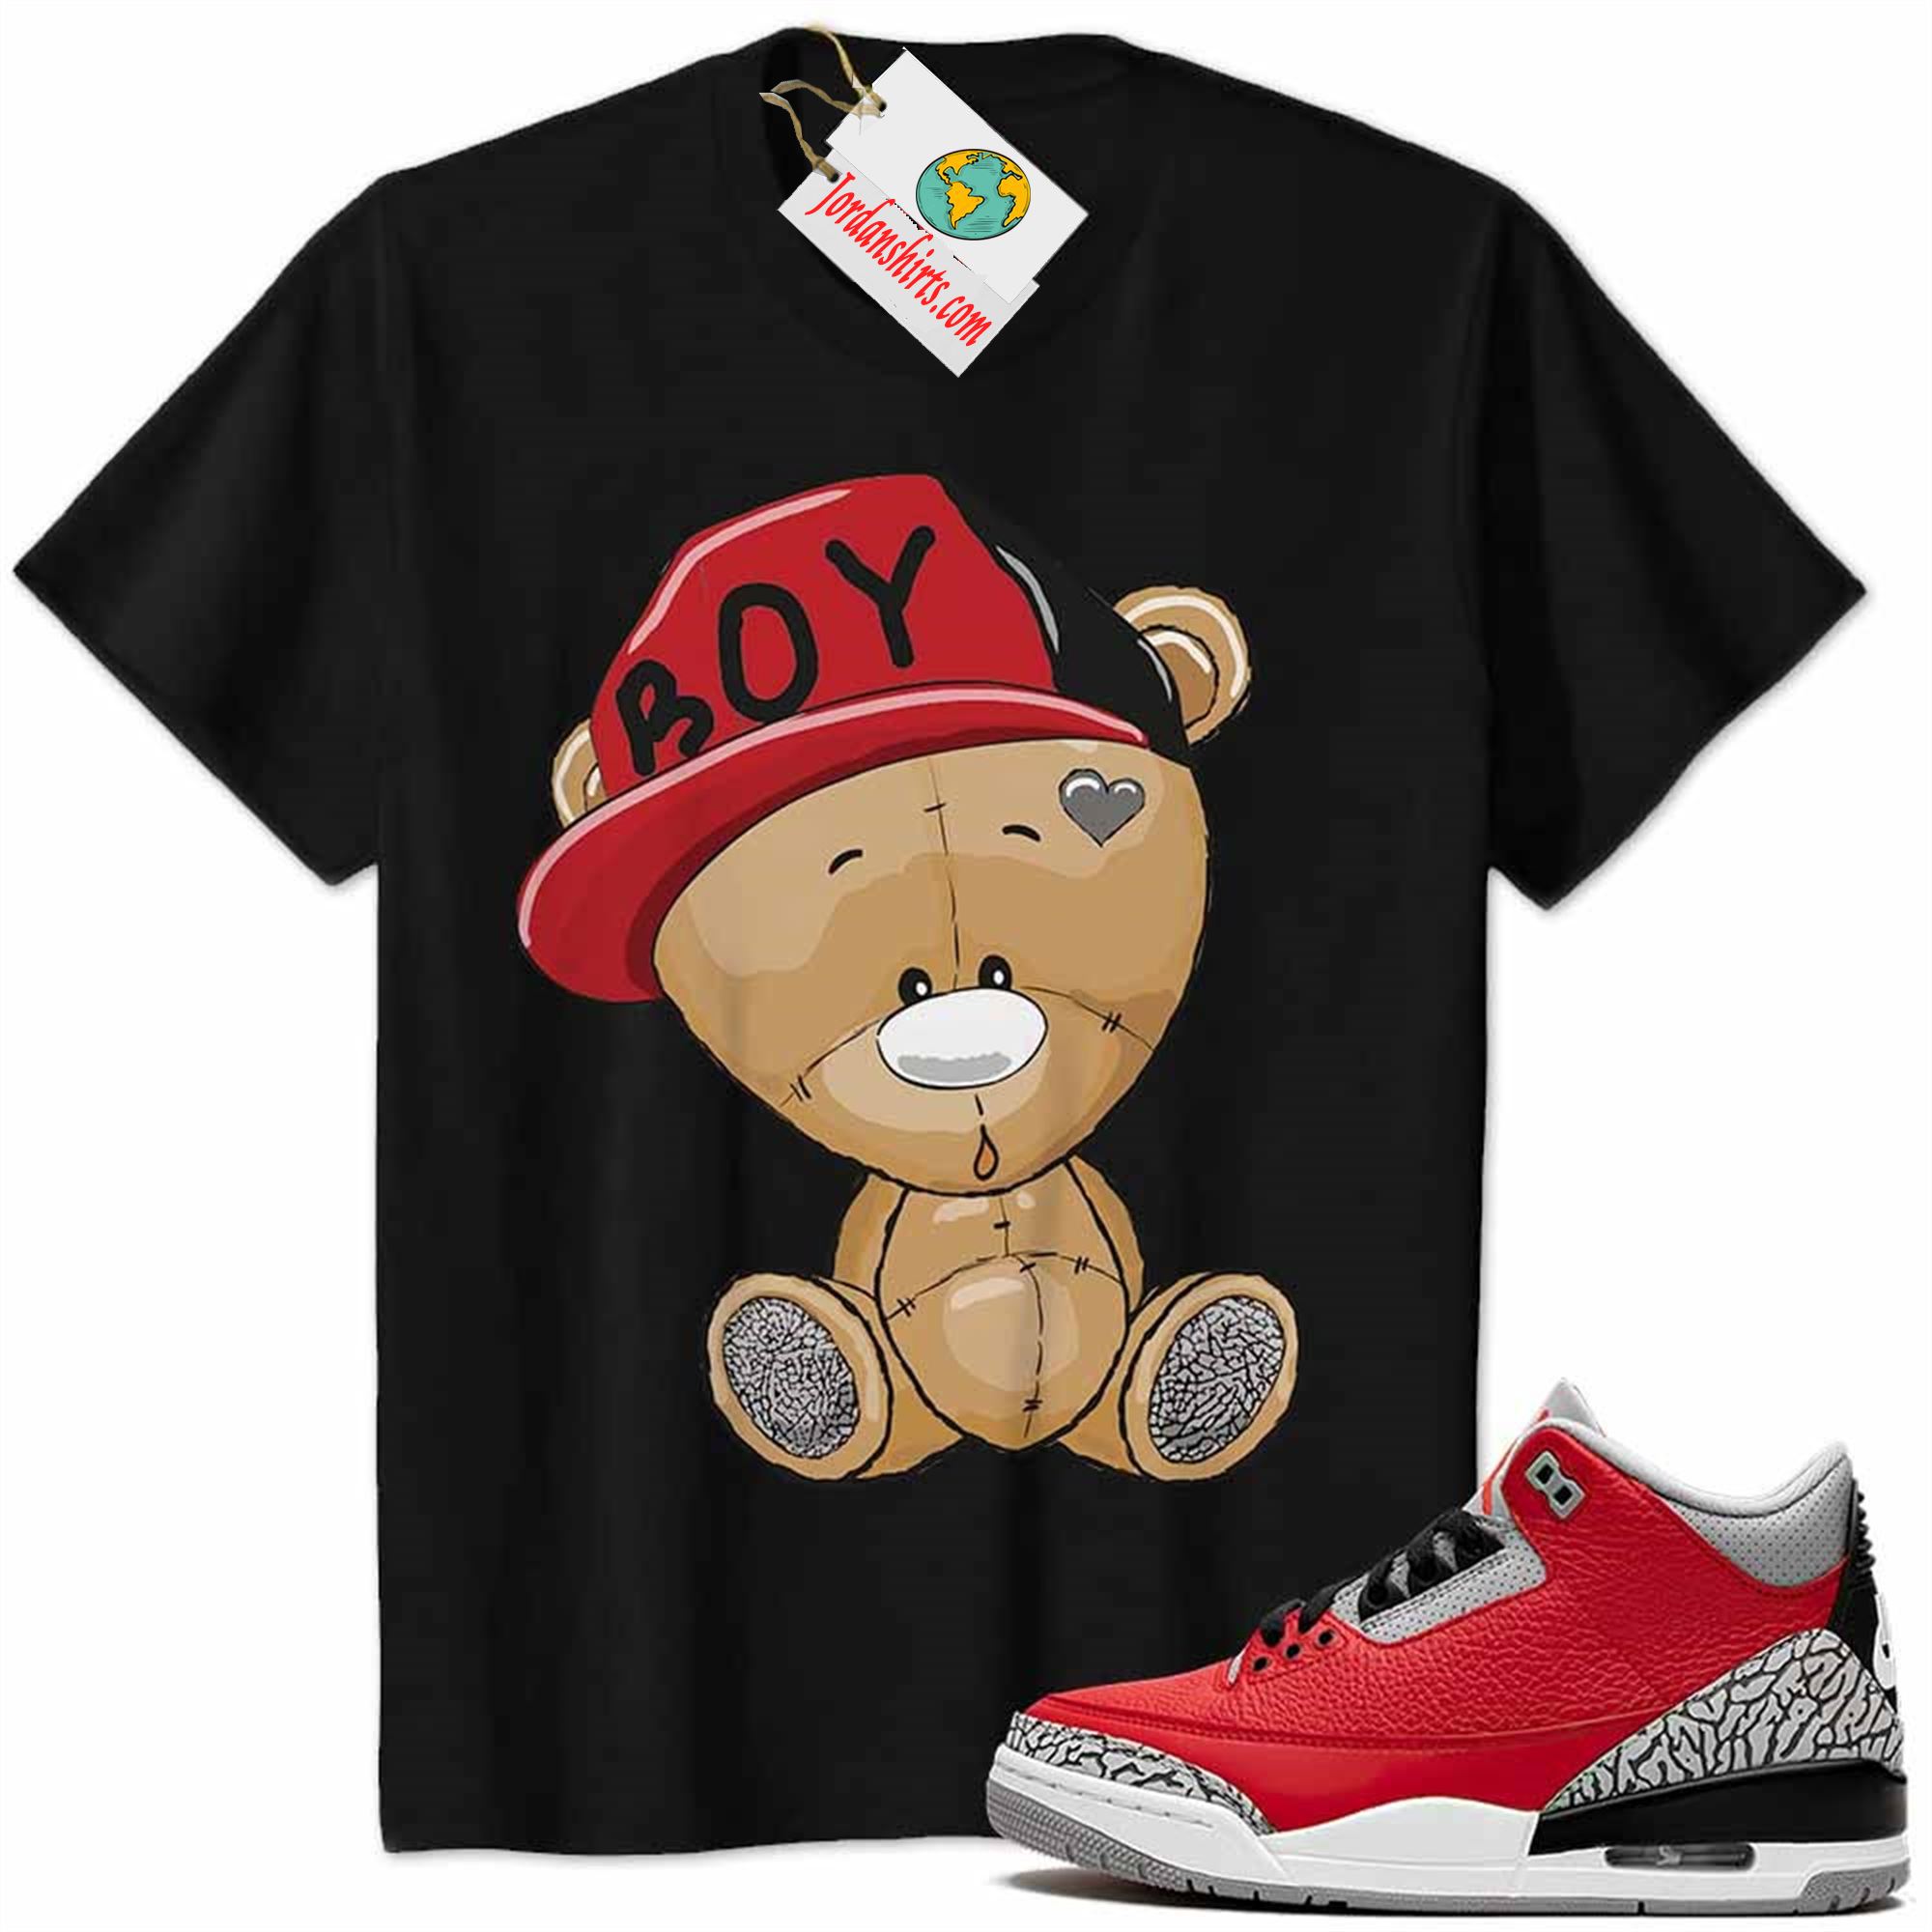 Jordan 3 Shirt, Jordan 3 Cement Shirt Cute Baby Teddy Bear Black Full Size Up To 5xl